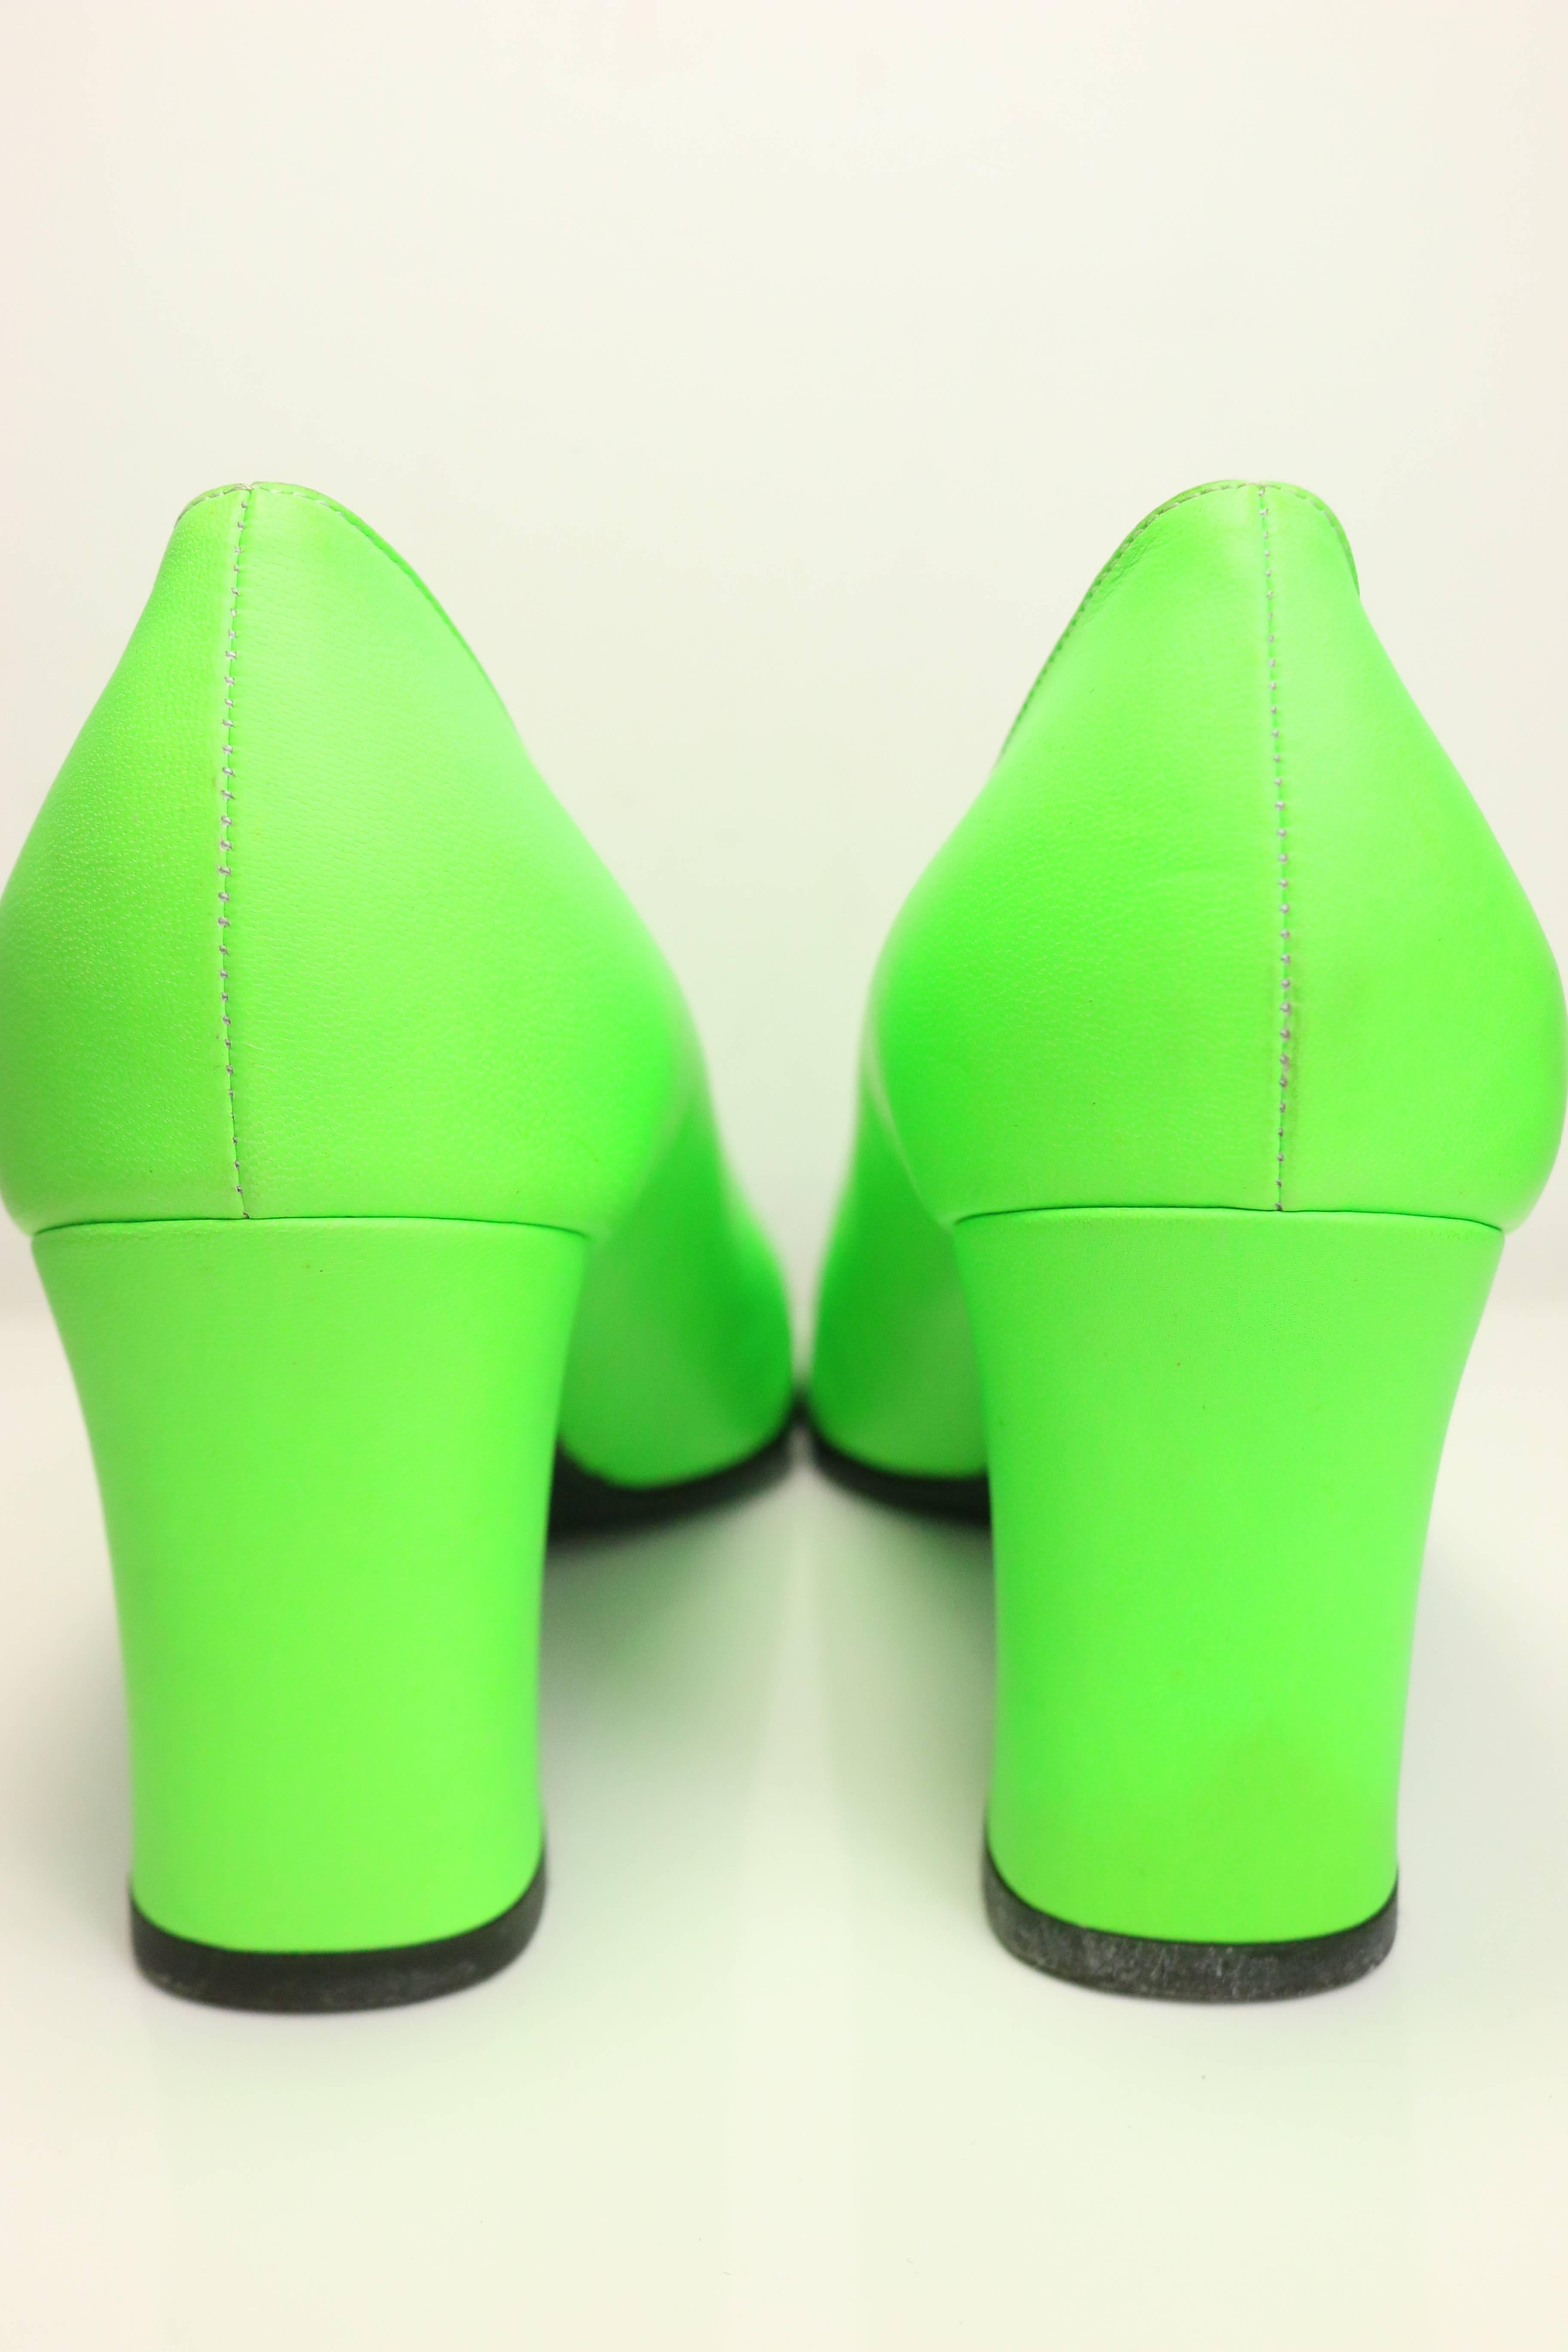 Vert Gianni Versace - Chaussures à talons carrés en cuir vert fluo en vente